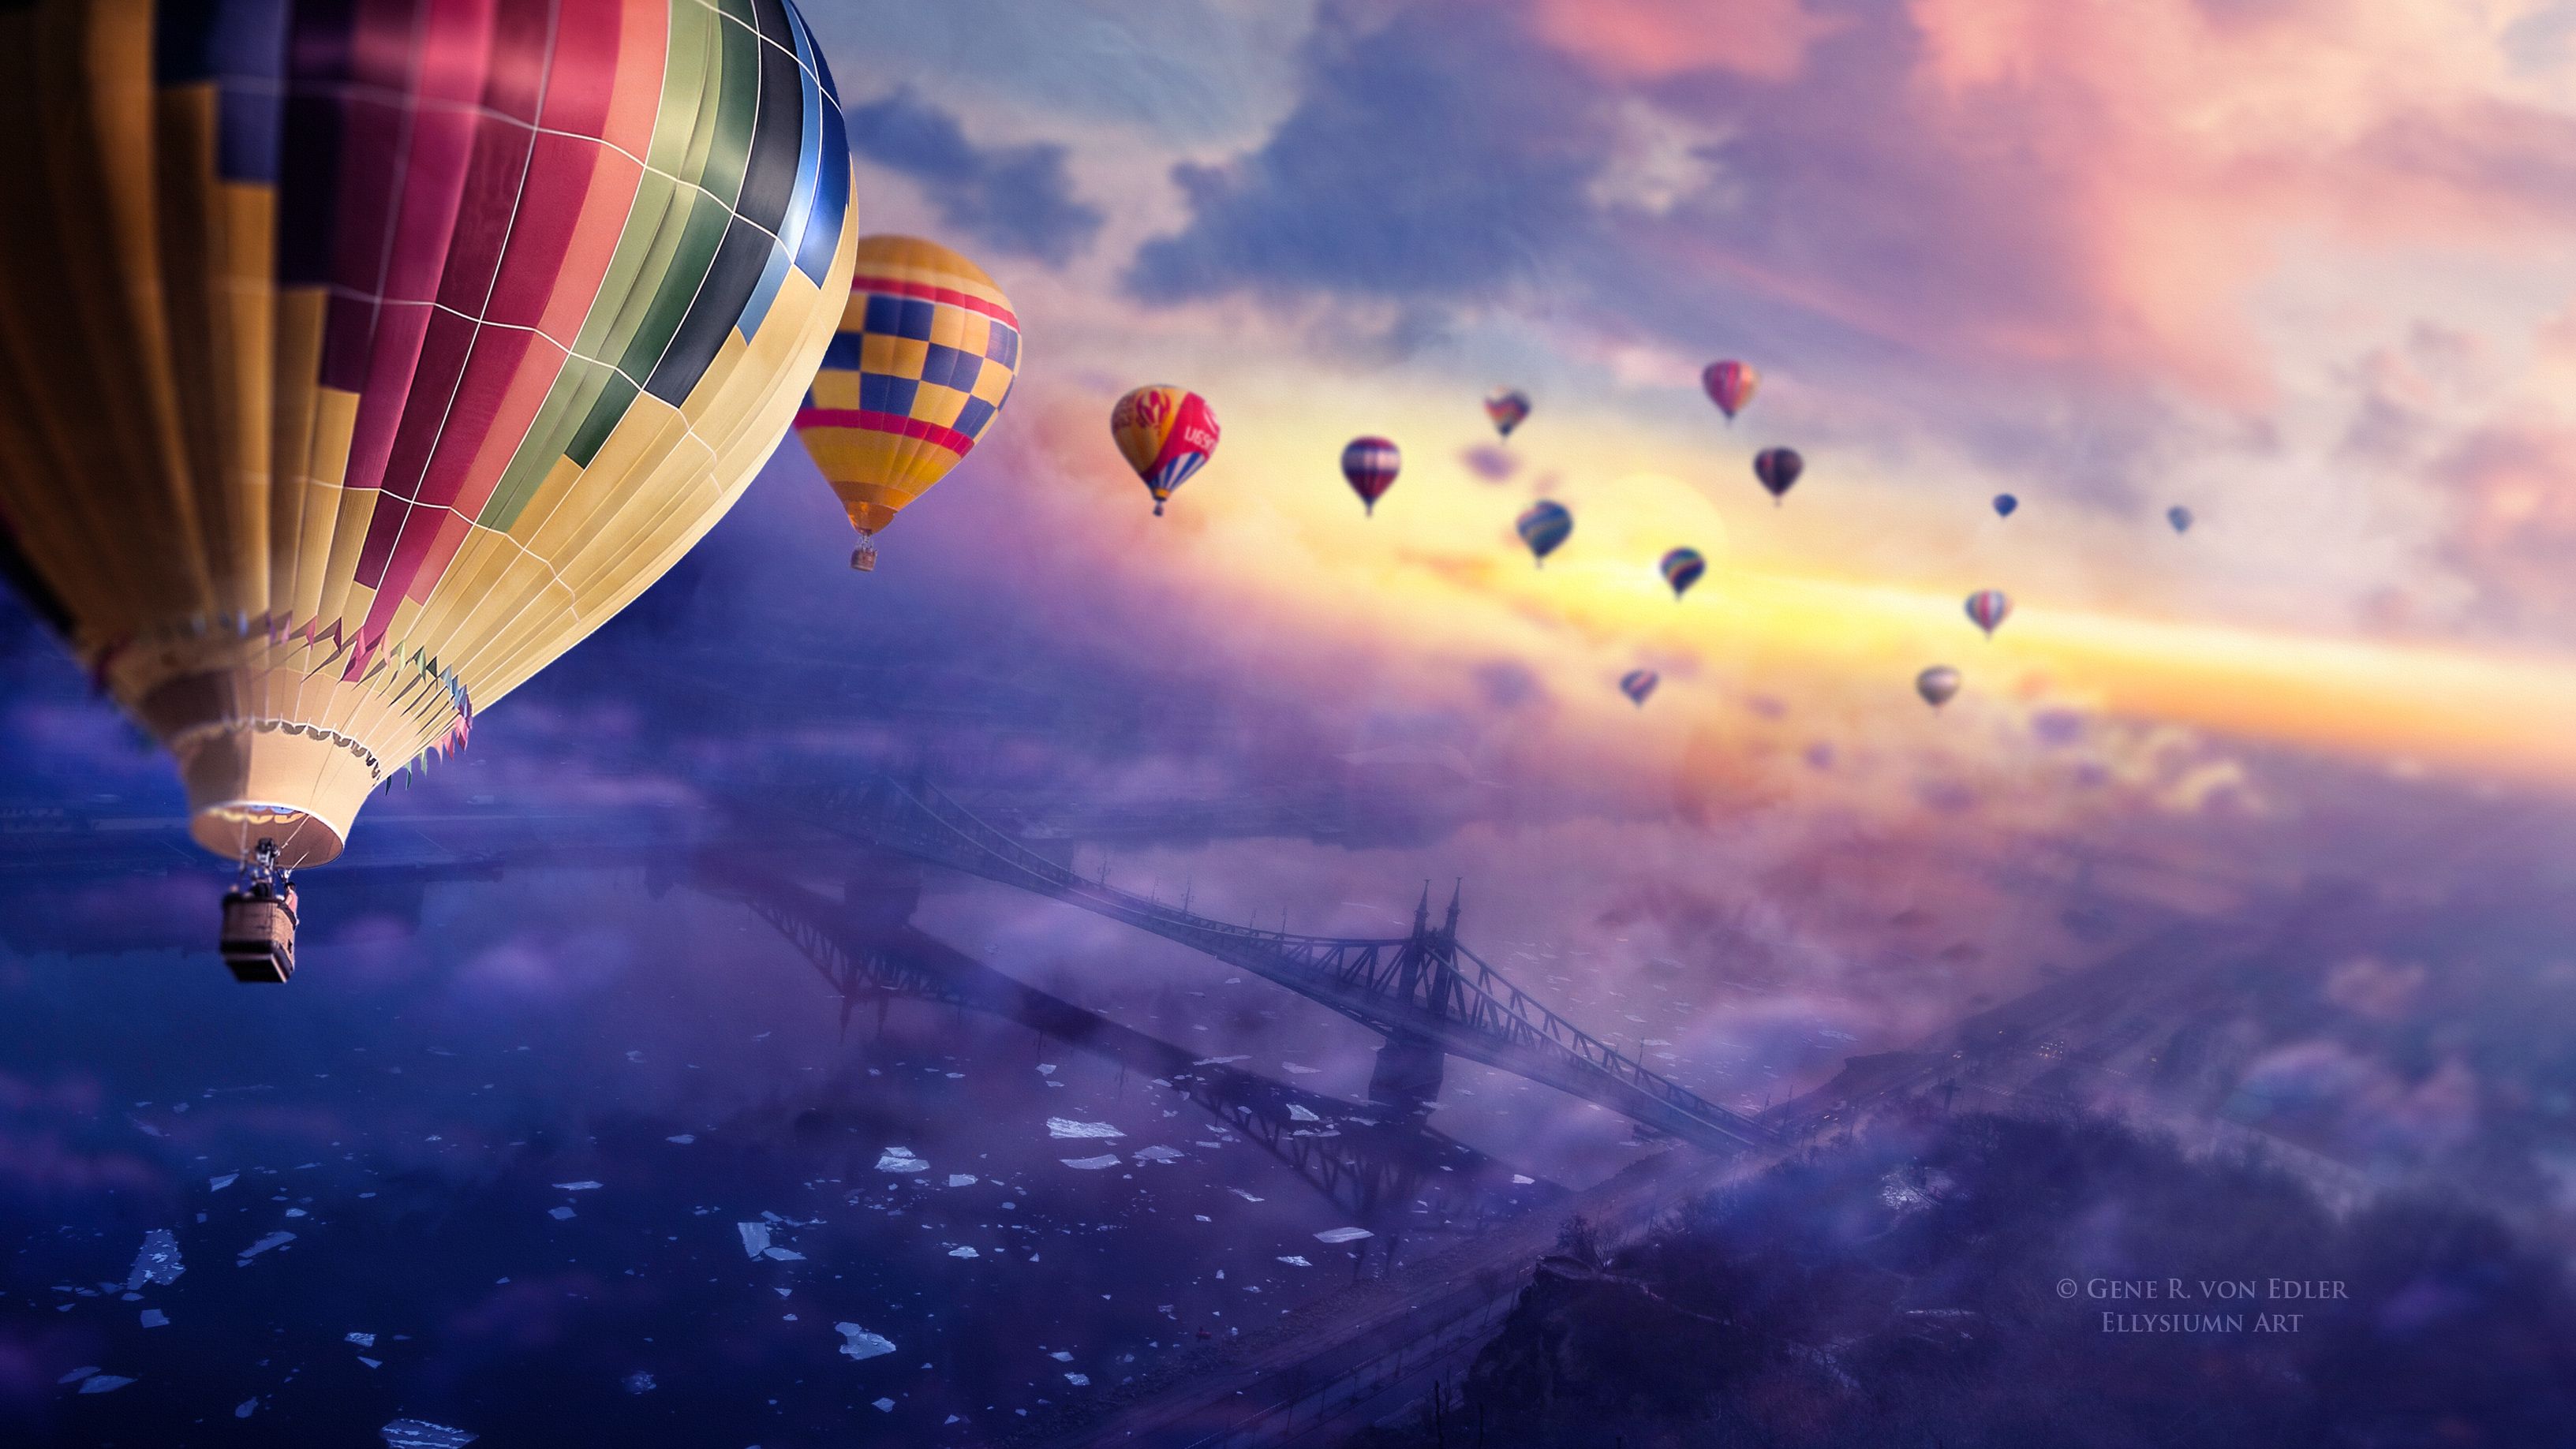 wallpaper balon,hot air ballooning,sky,hot air balloon,atmosphere,cloud